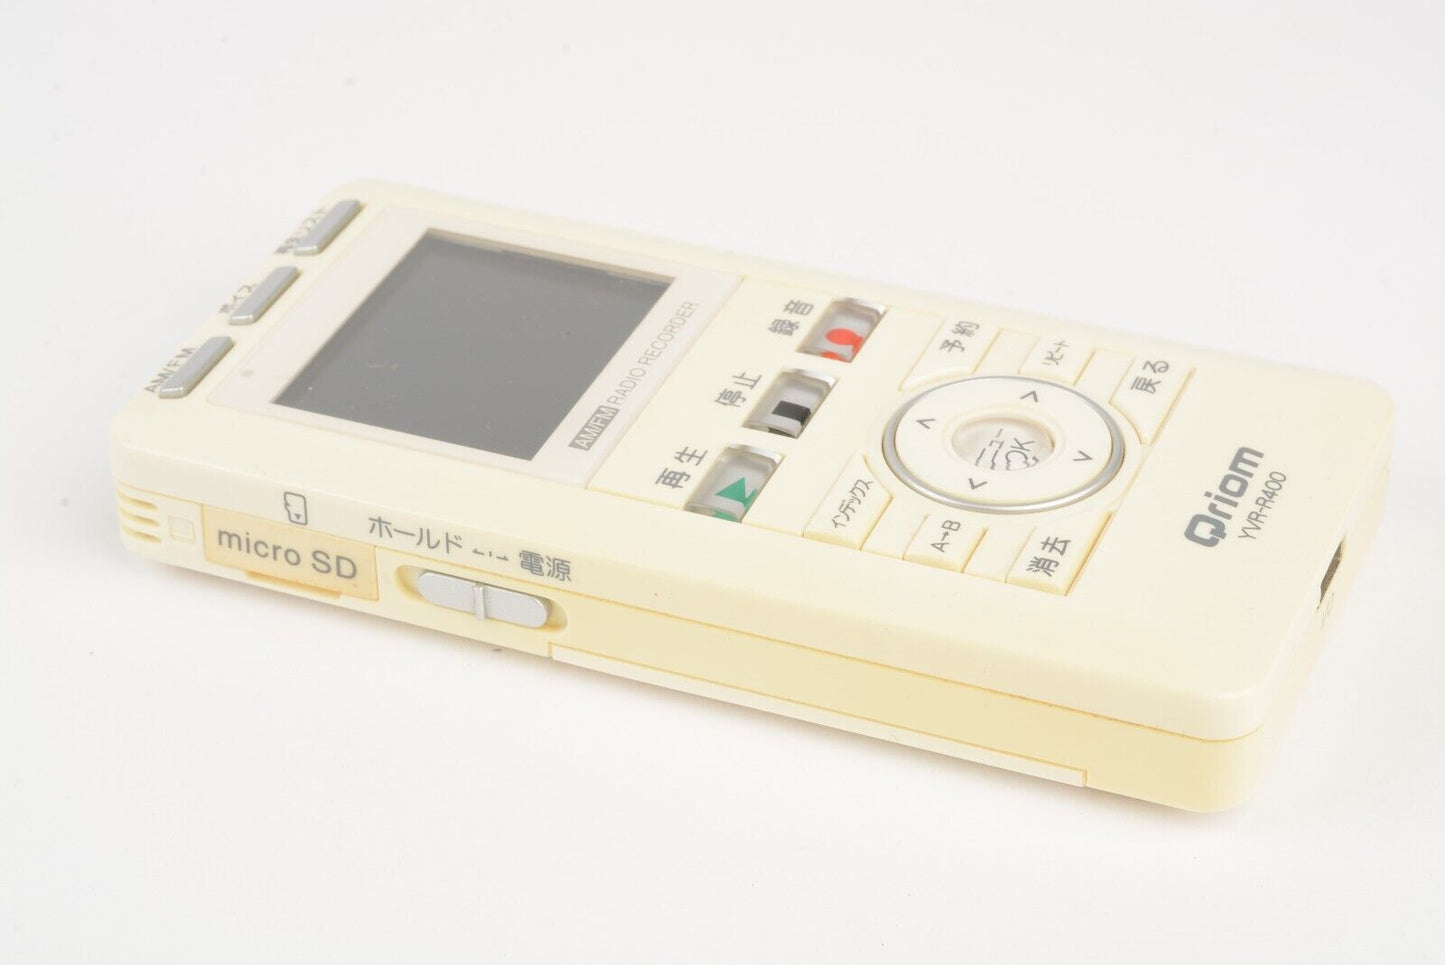 EXC++ QRIOM YVR-R400 WHITE RADIO VOICE RECORDER, COMPLETE, BARELY USED